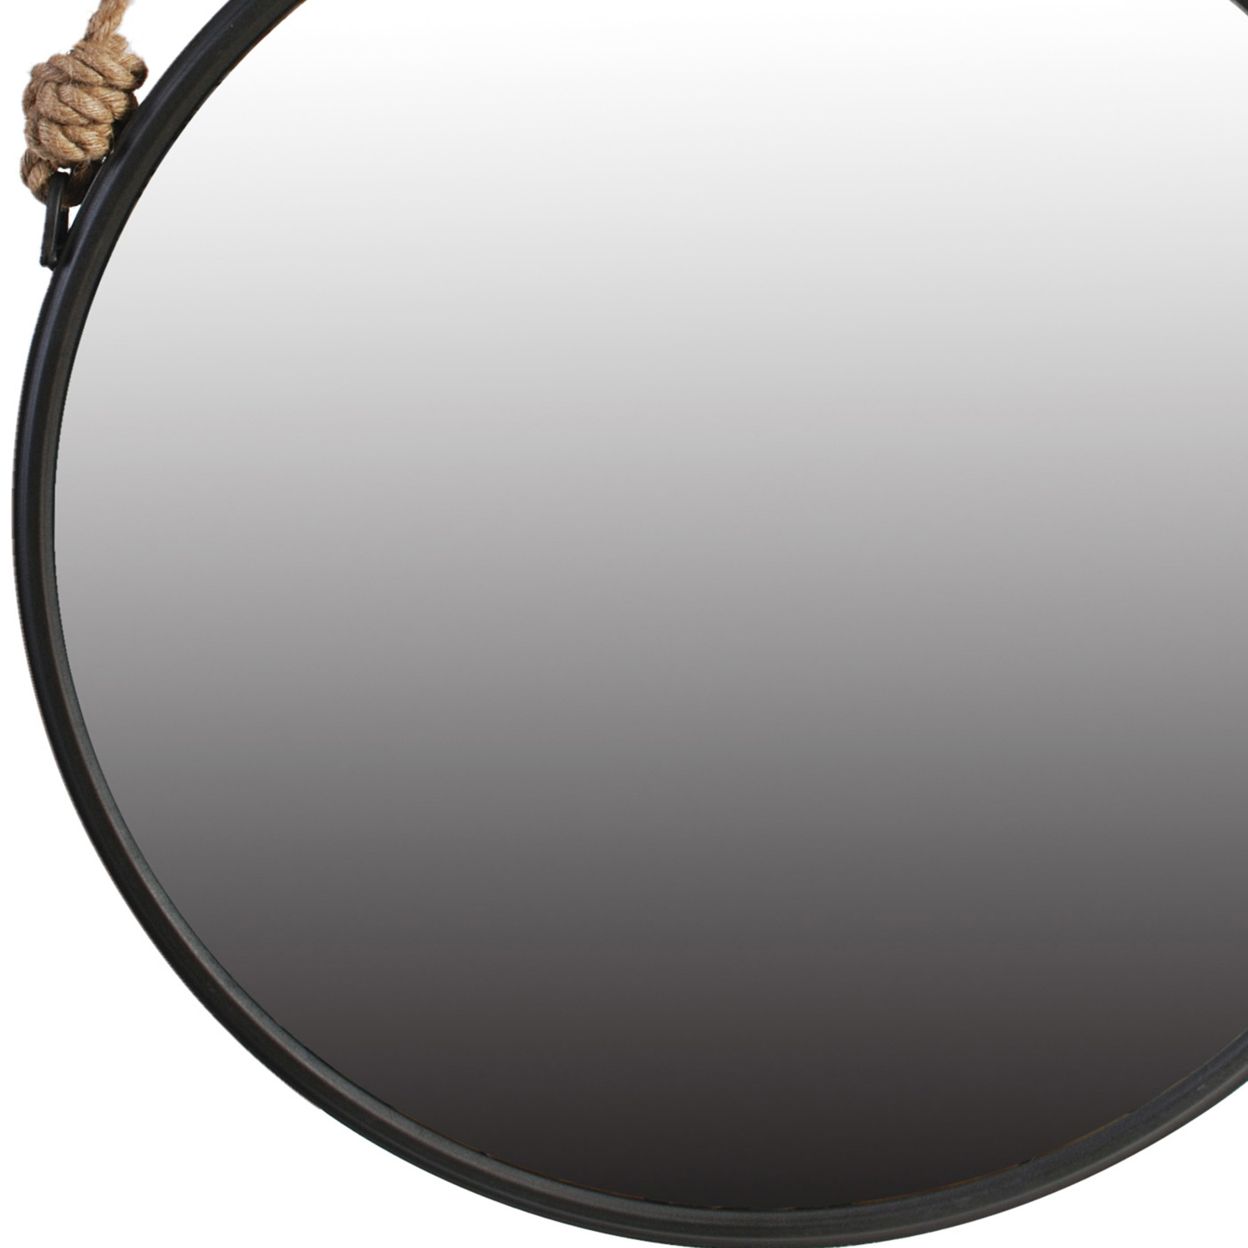 Round Metal Encased Mirror With Braided Rope Hanger, Black- Saltoro Sherpi